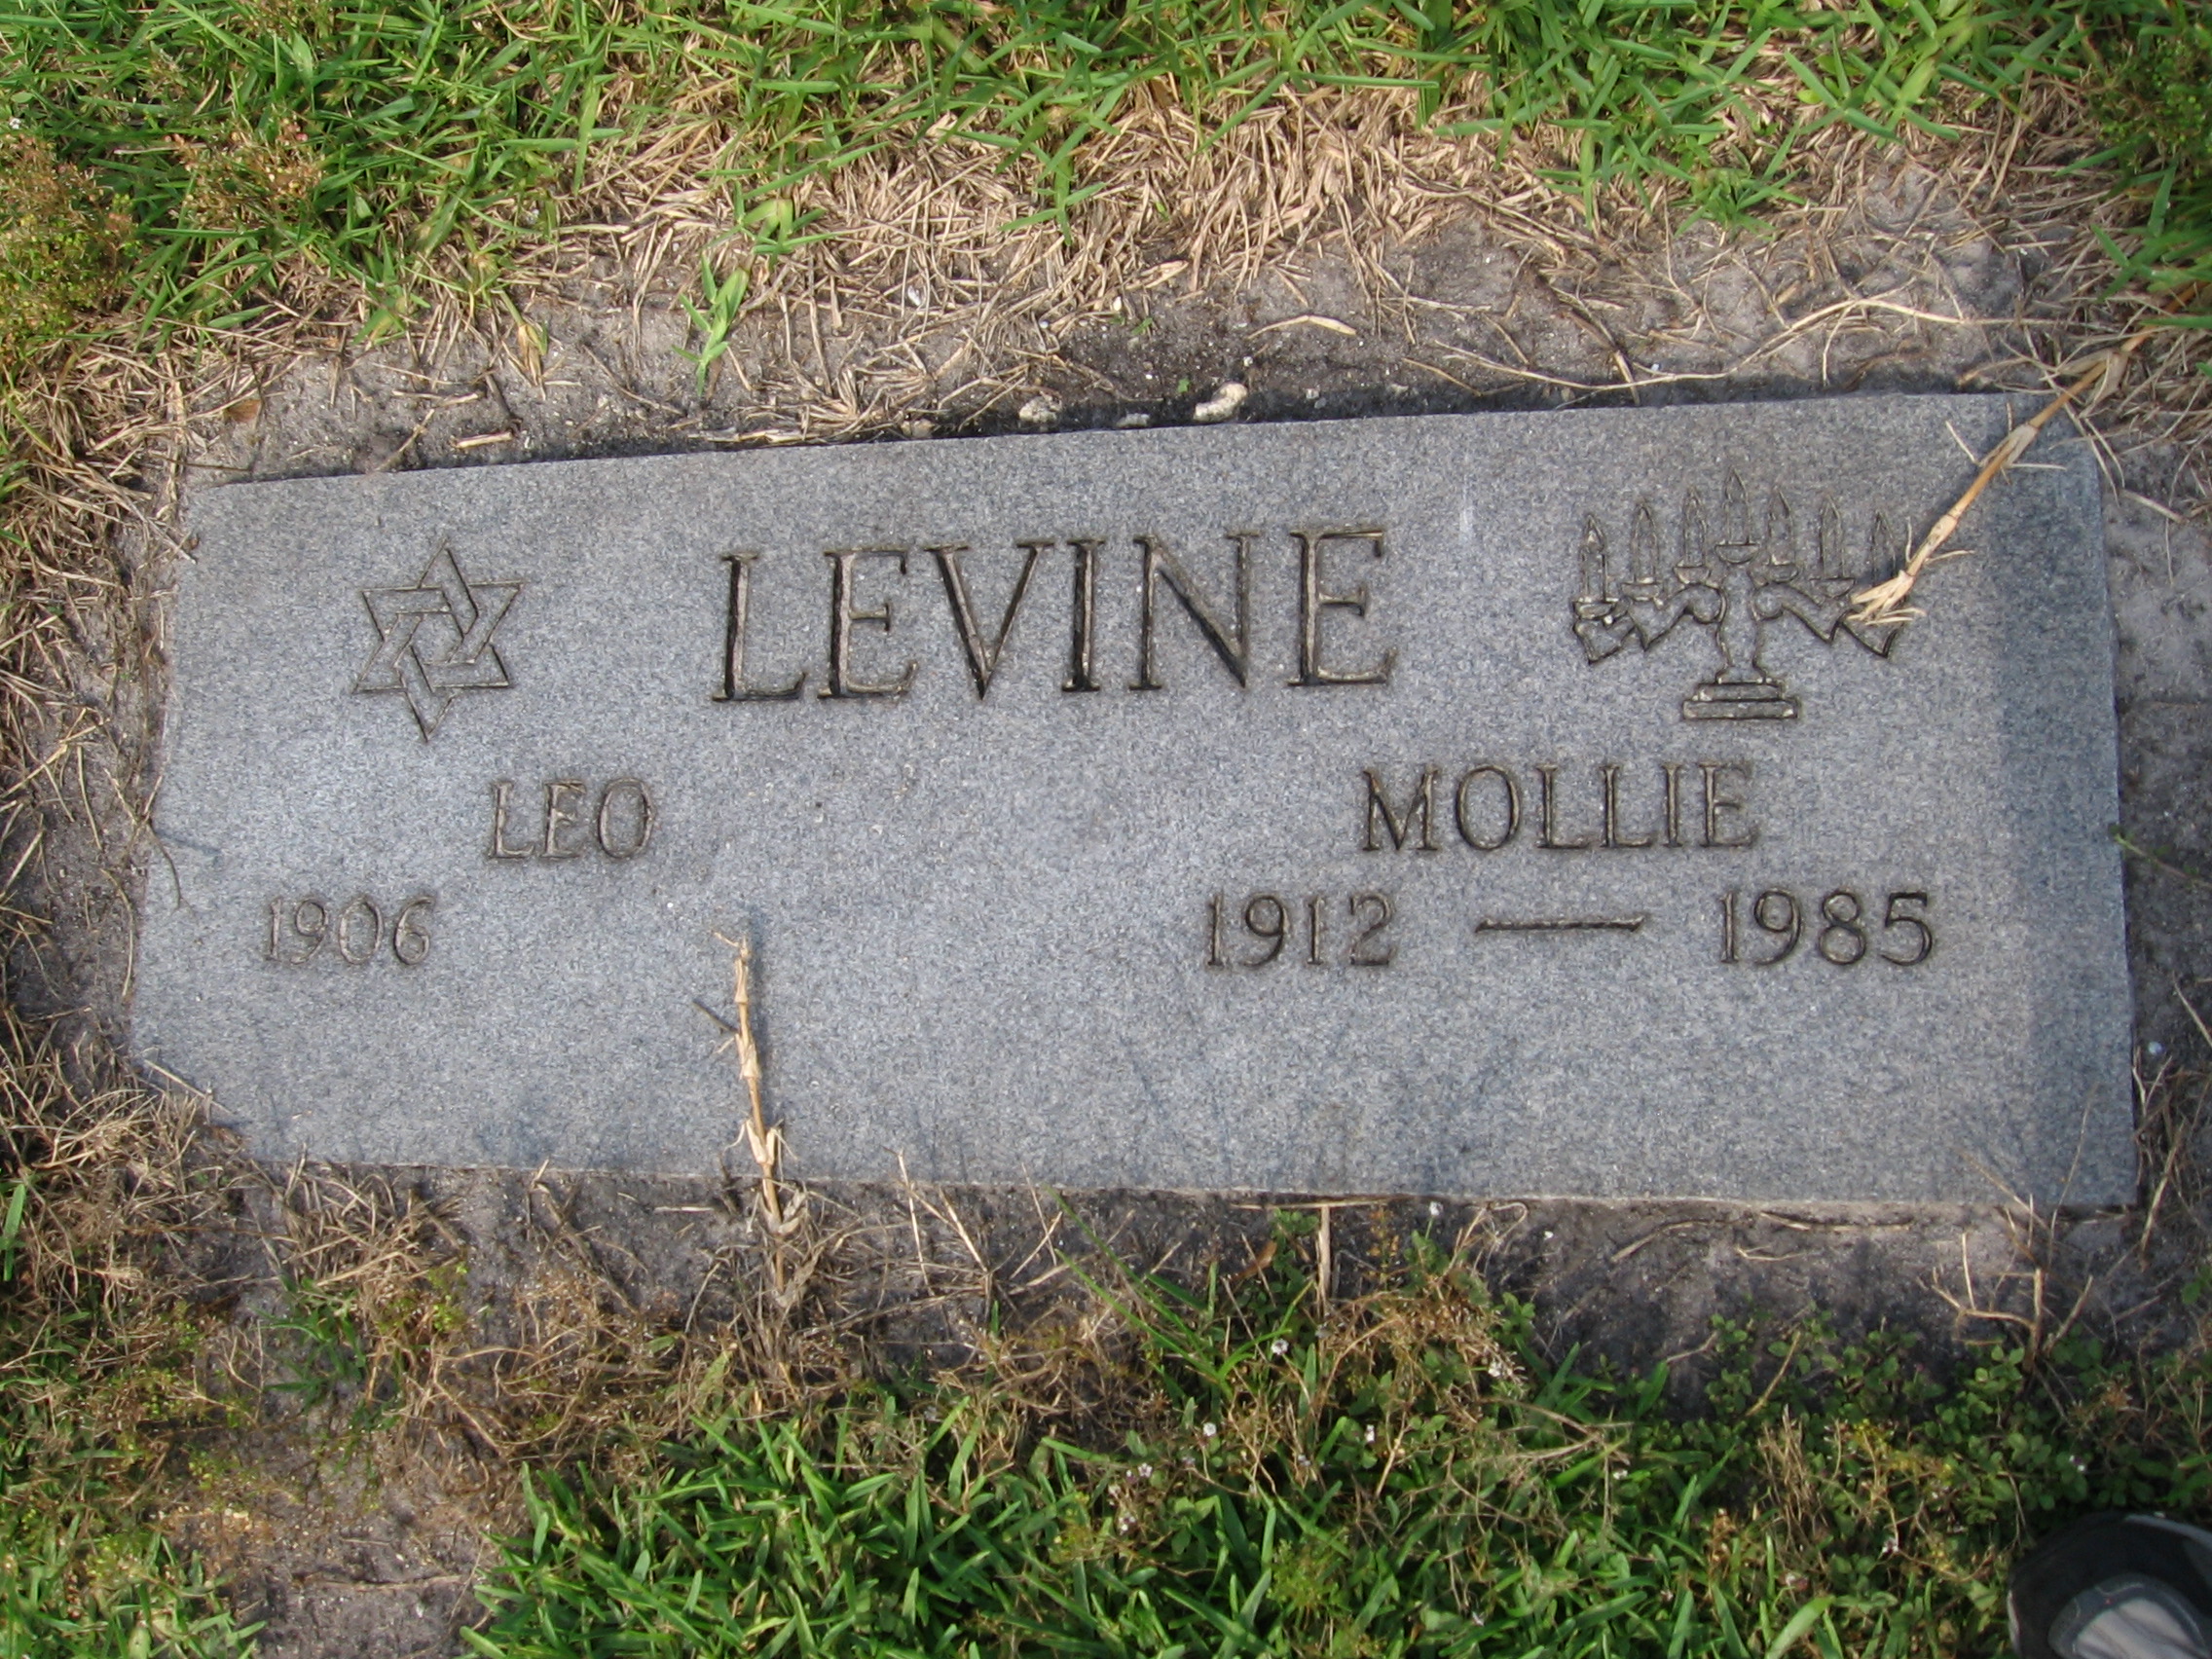 Mollie Levine